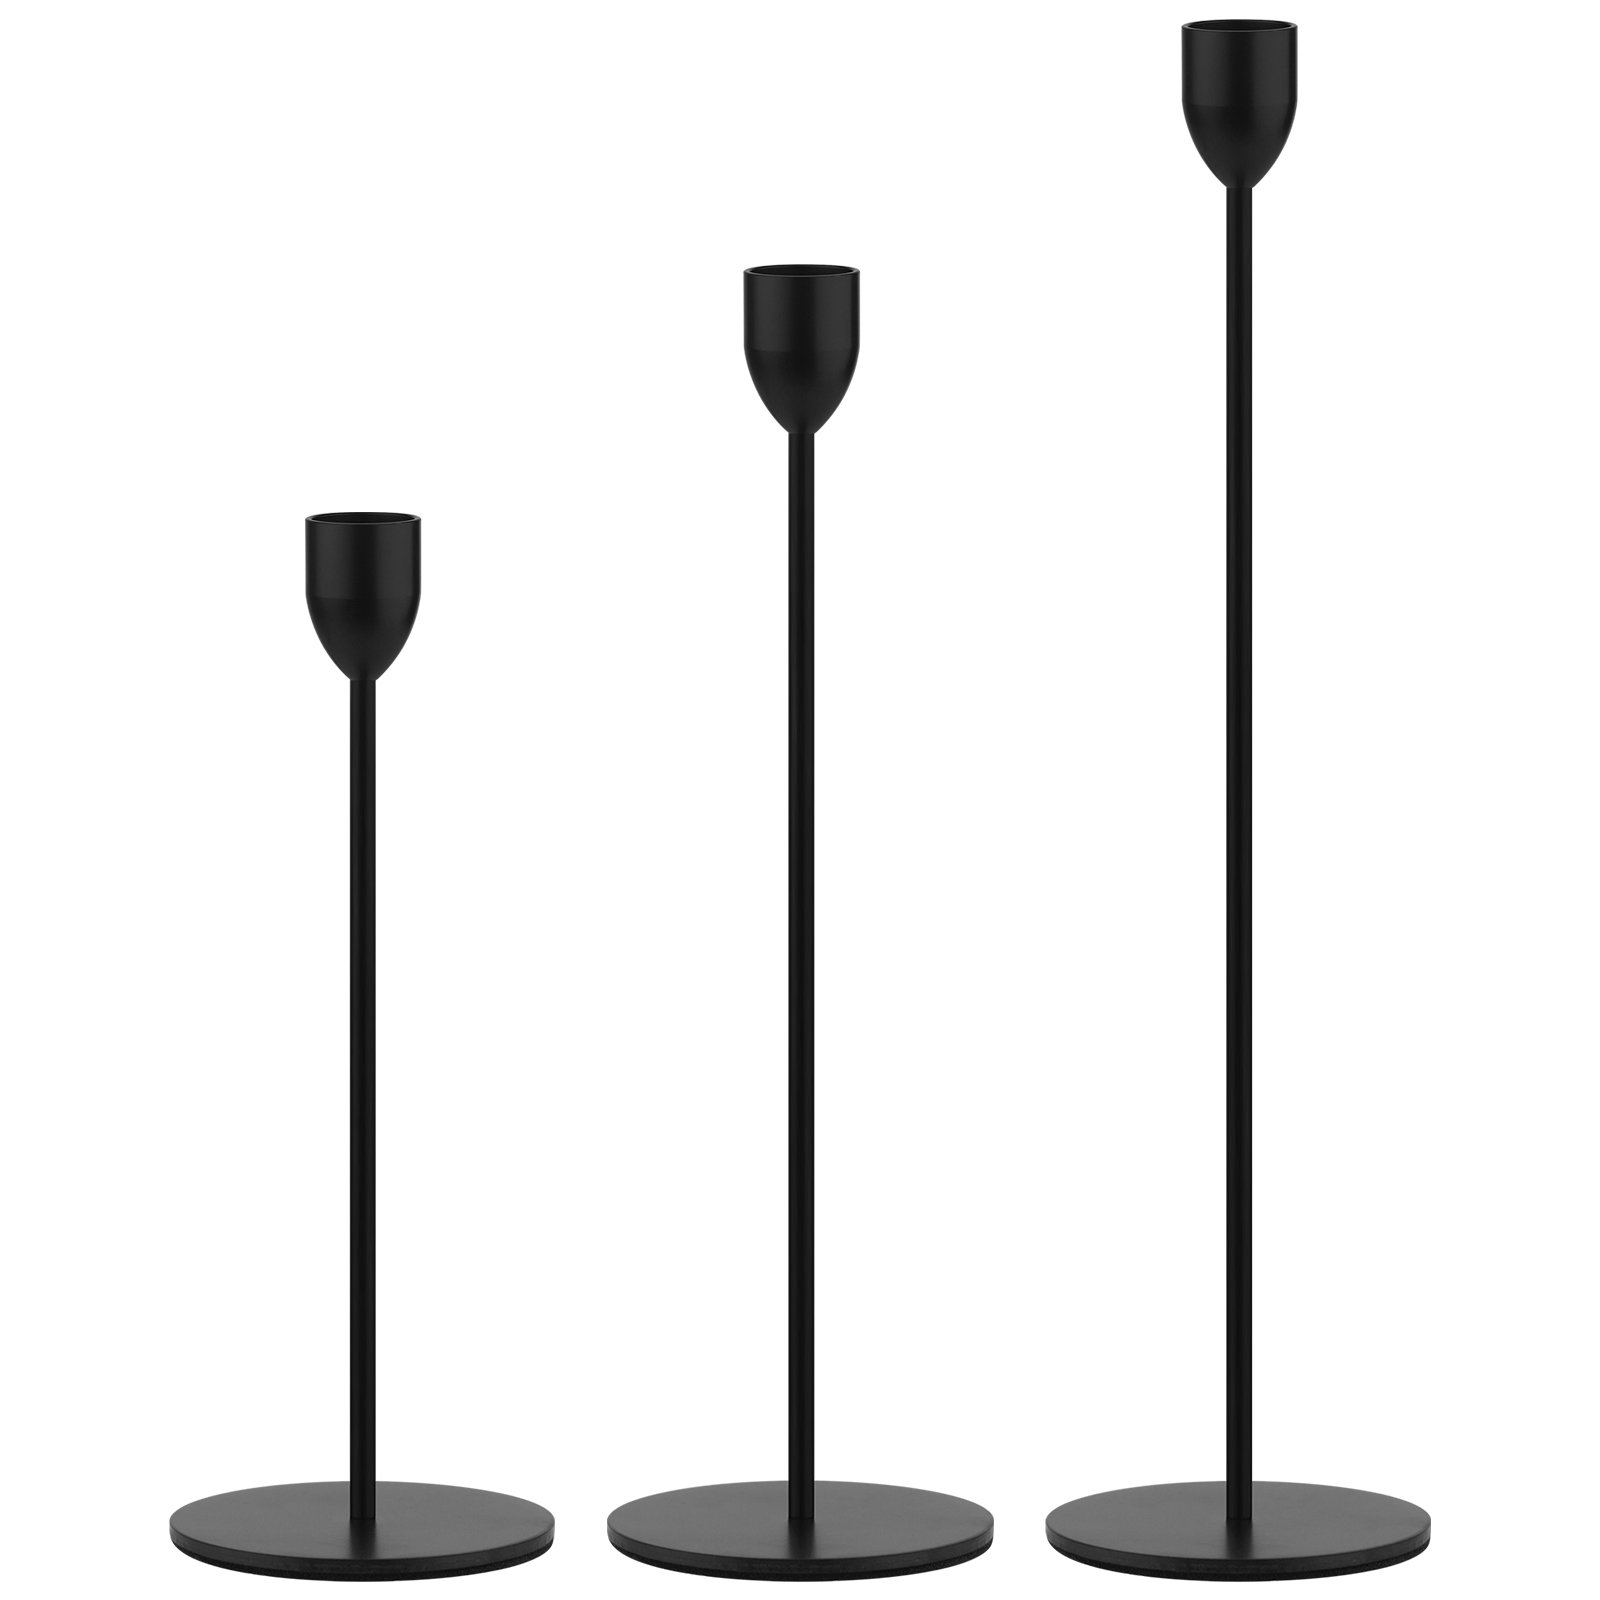 Ohtomber Matal Black Candle Holder - 3PCS Candlestick Holders, Candle Sticks Holder Decor for Pillar